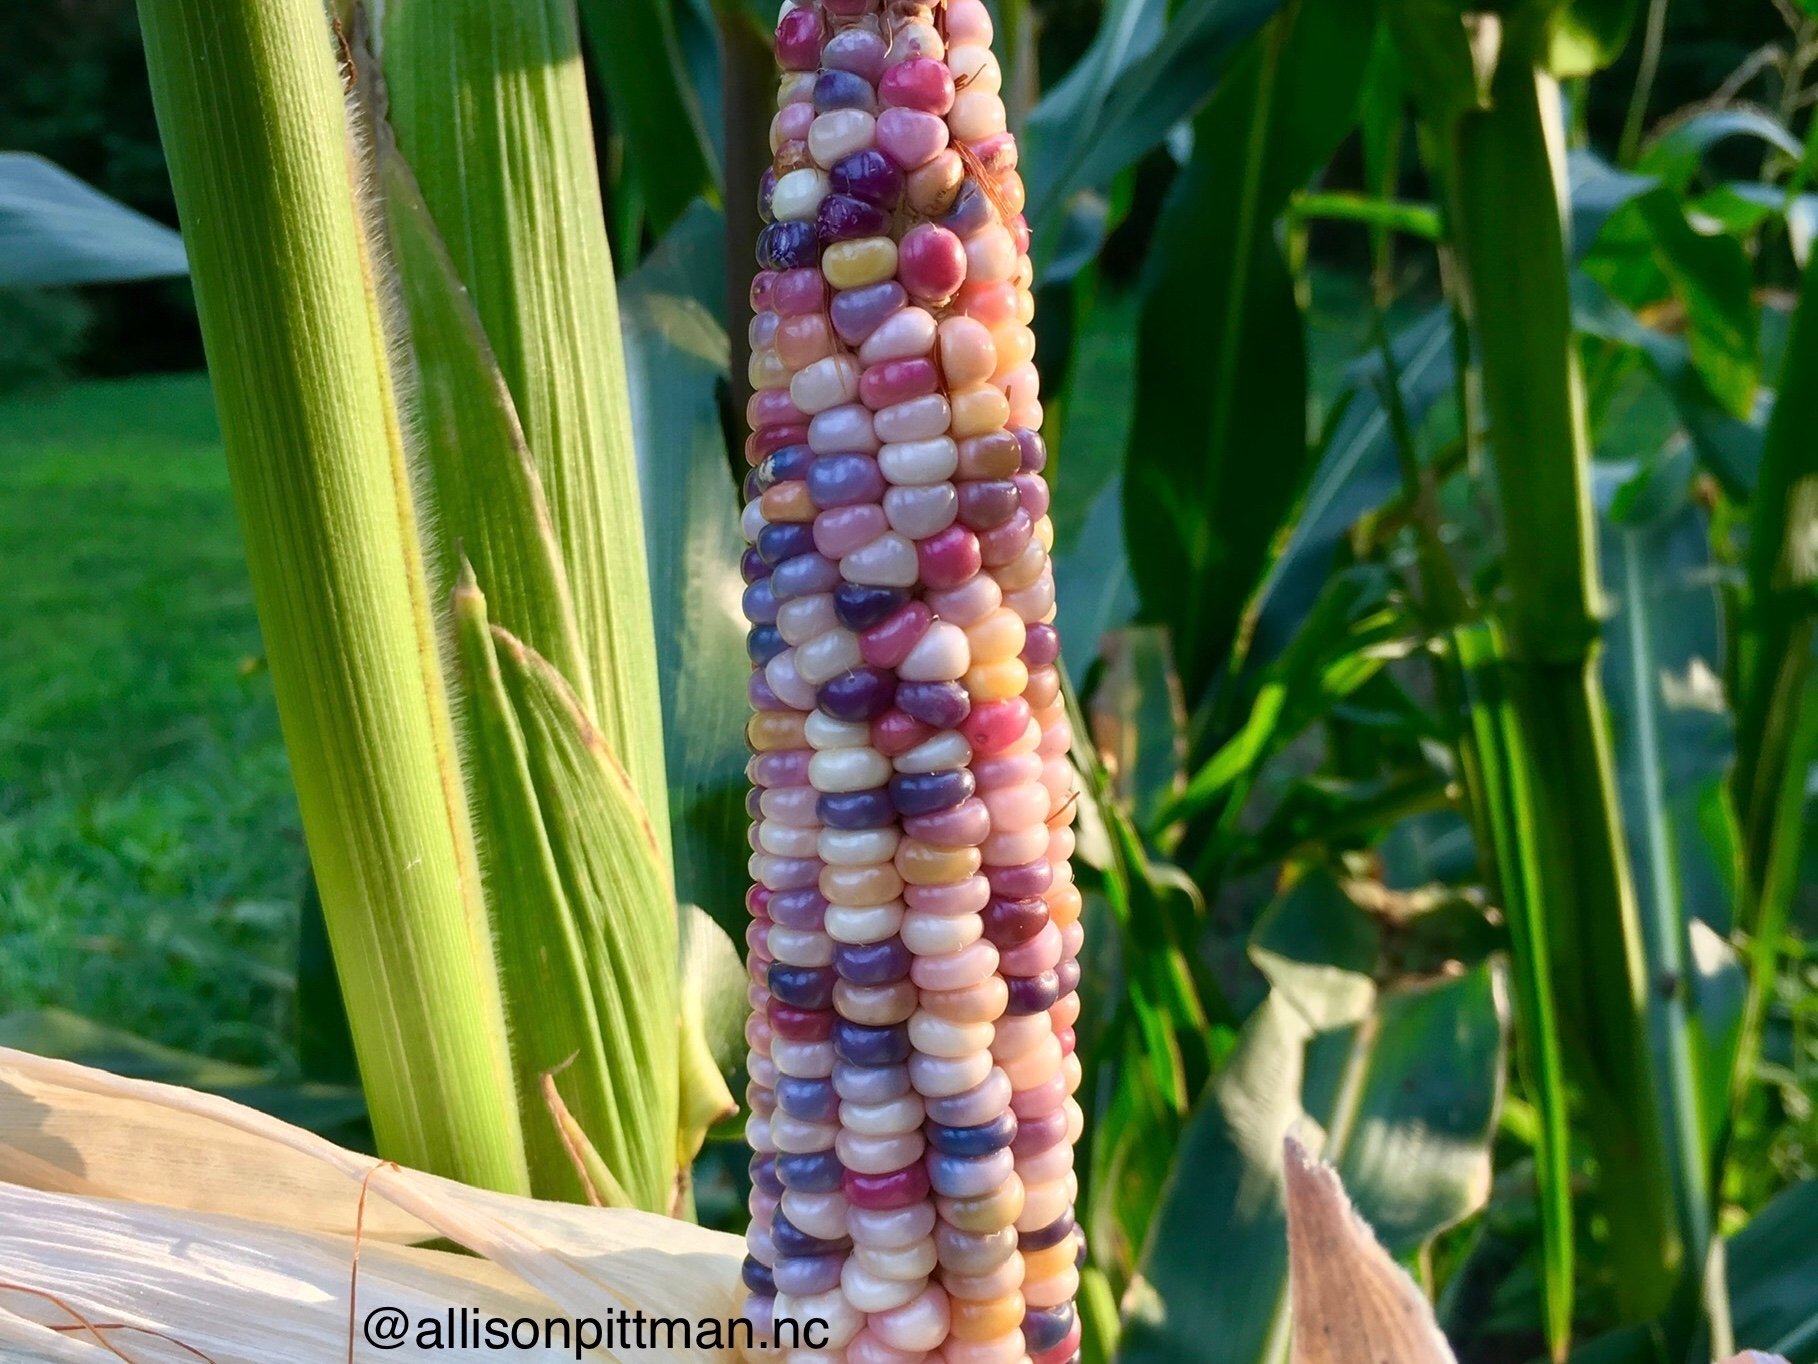 Glass gem corn has multi-colored kernels